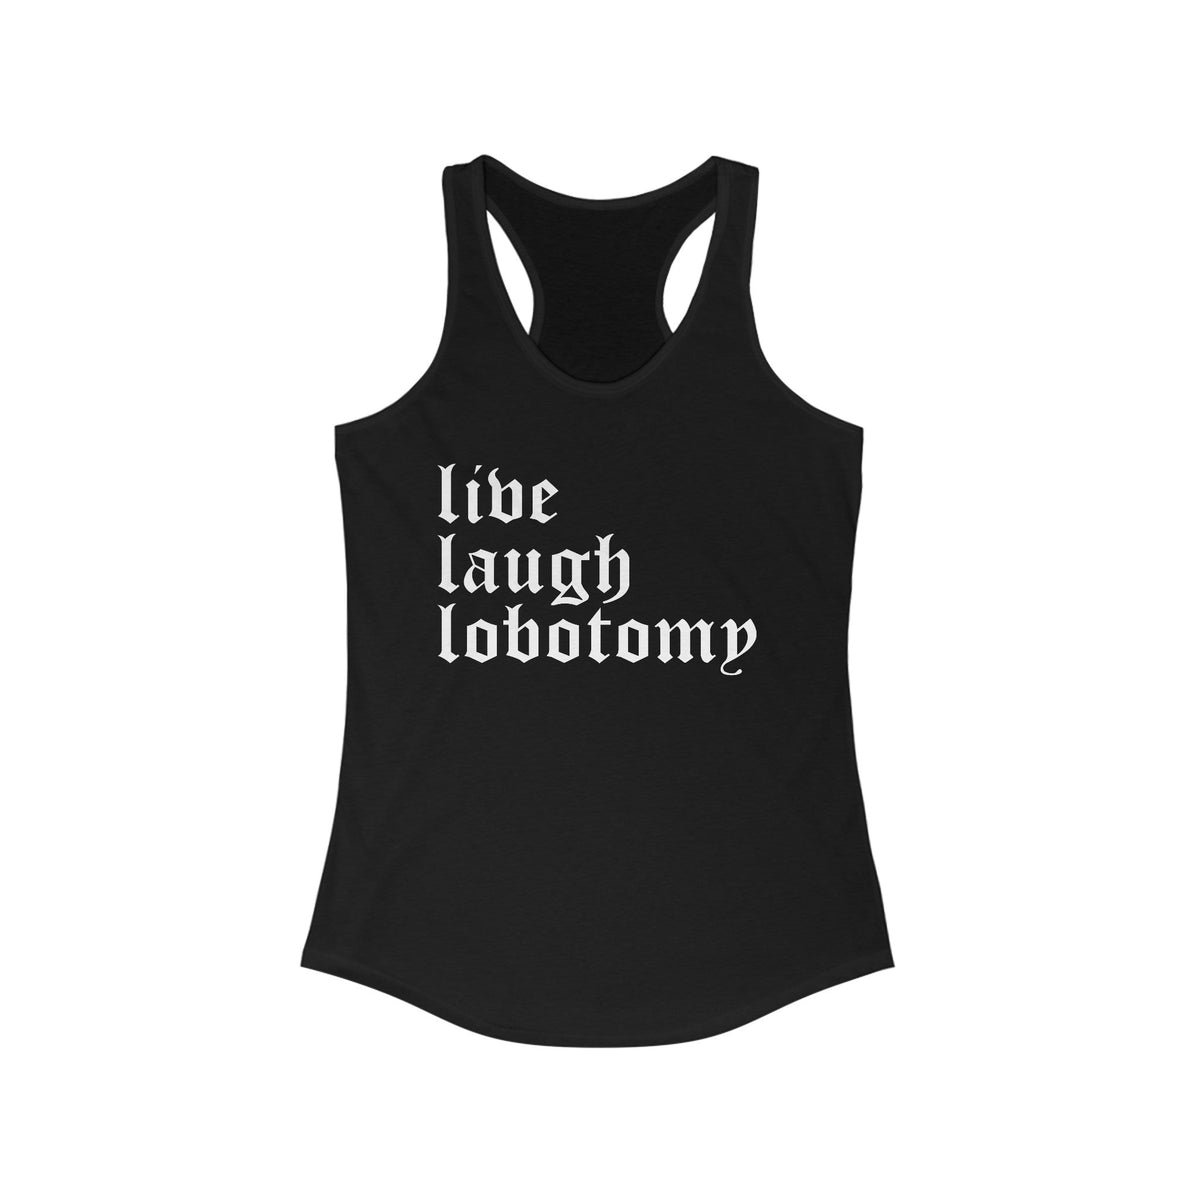 Live Laugh Lobotomy Women's Racerback Tank - Goth Cloth Co.Tank Top57447959674963906494